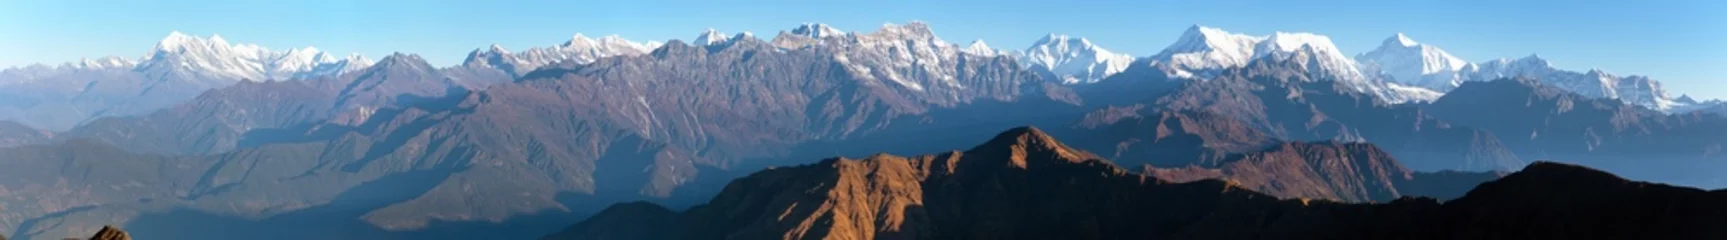 Cercles muraux Makalu mounts Everest Lhotse and Makalu great himalayan range